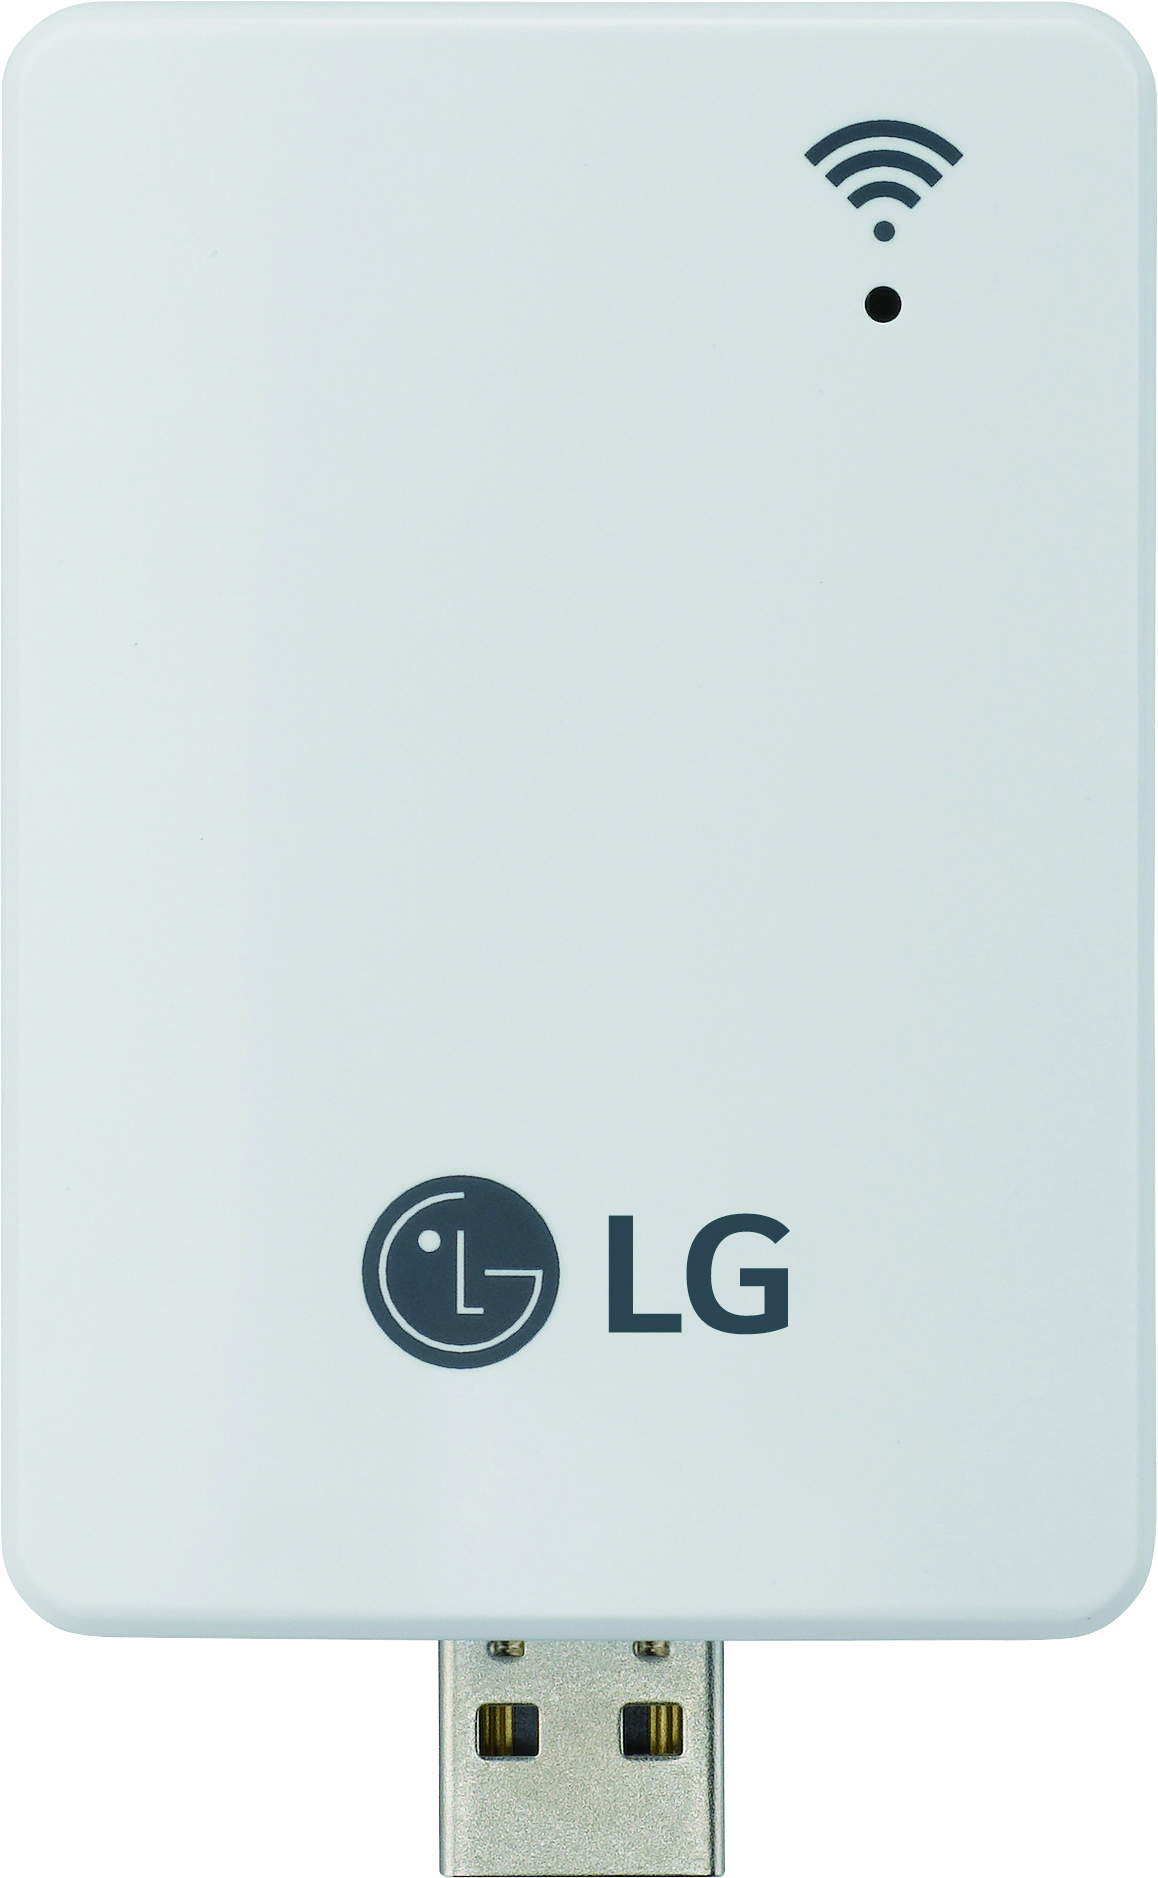 LG THERMA V WiFi Modul mit LG ThinQ